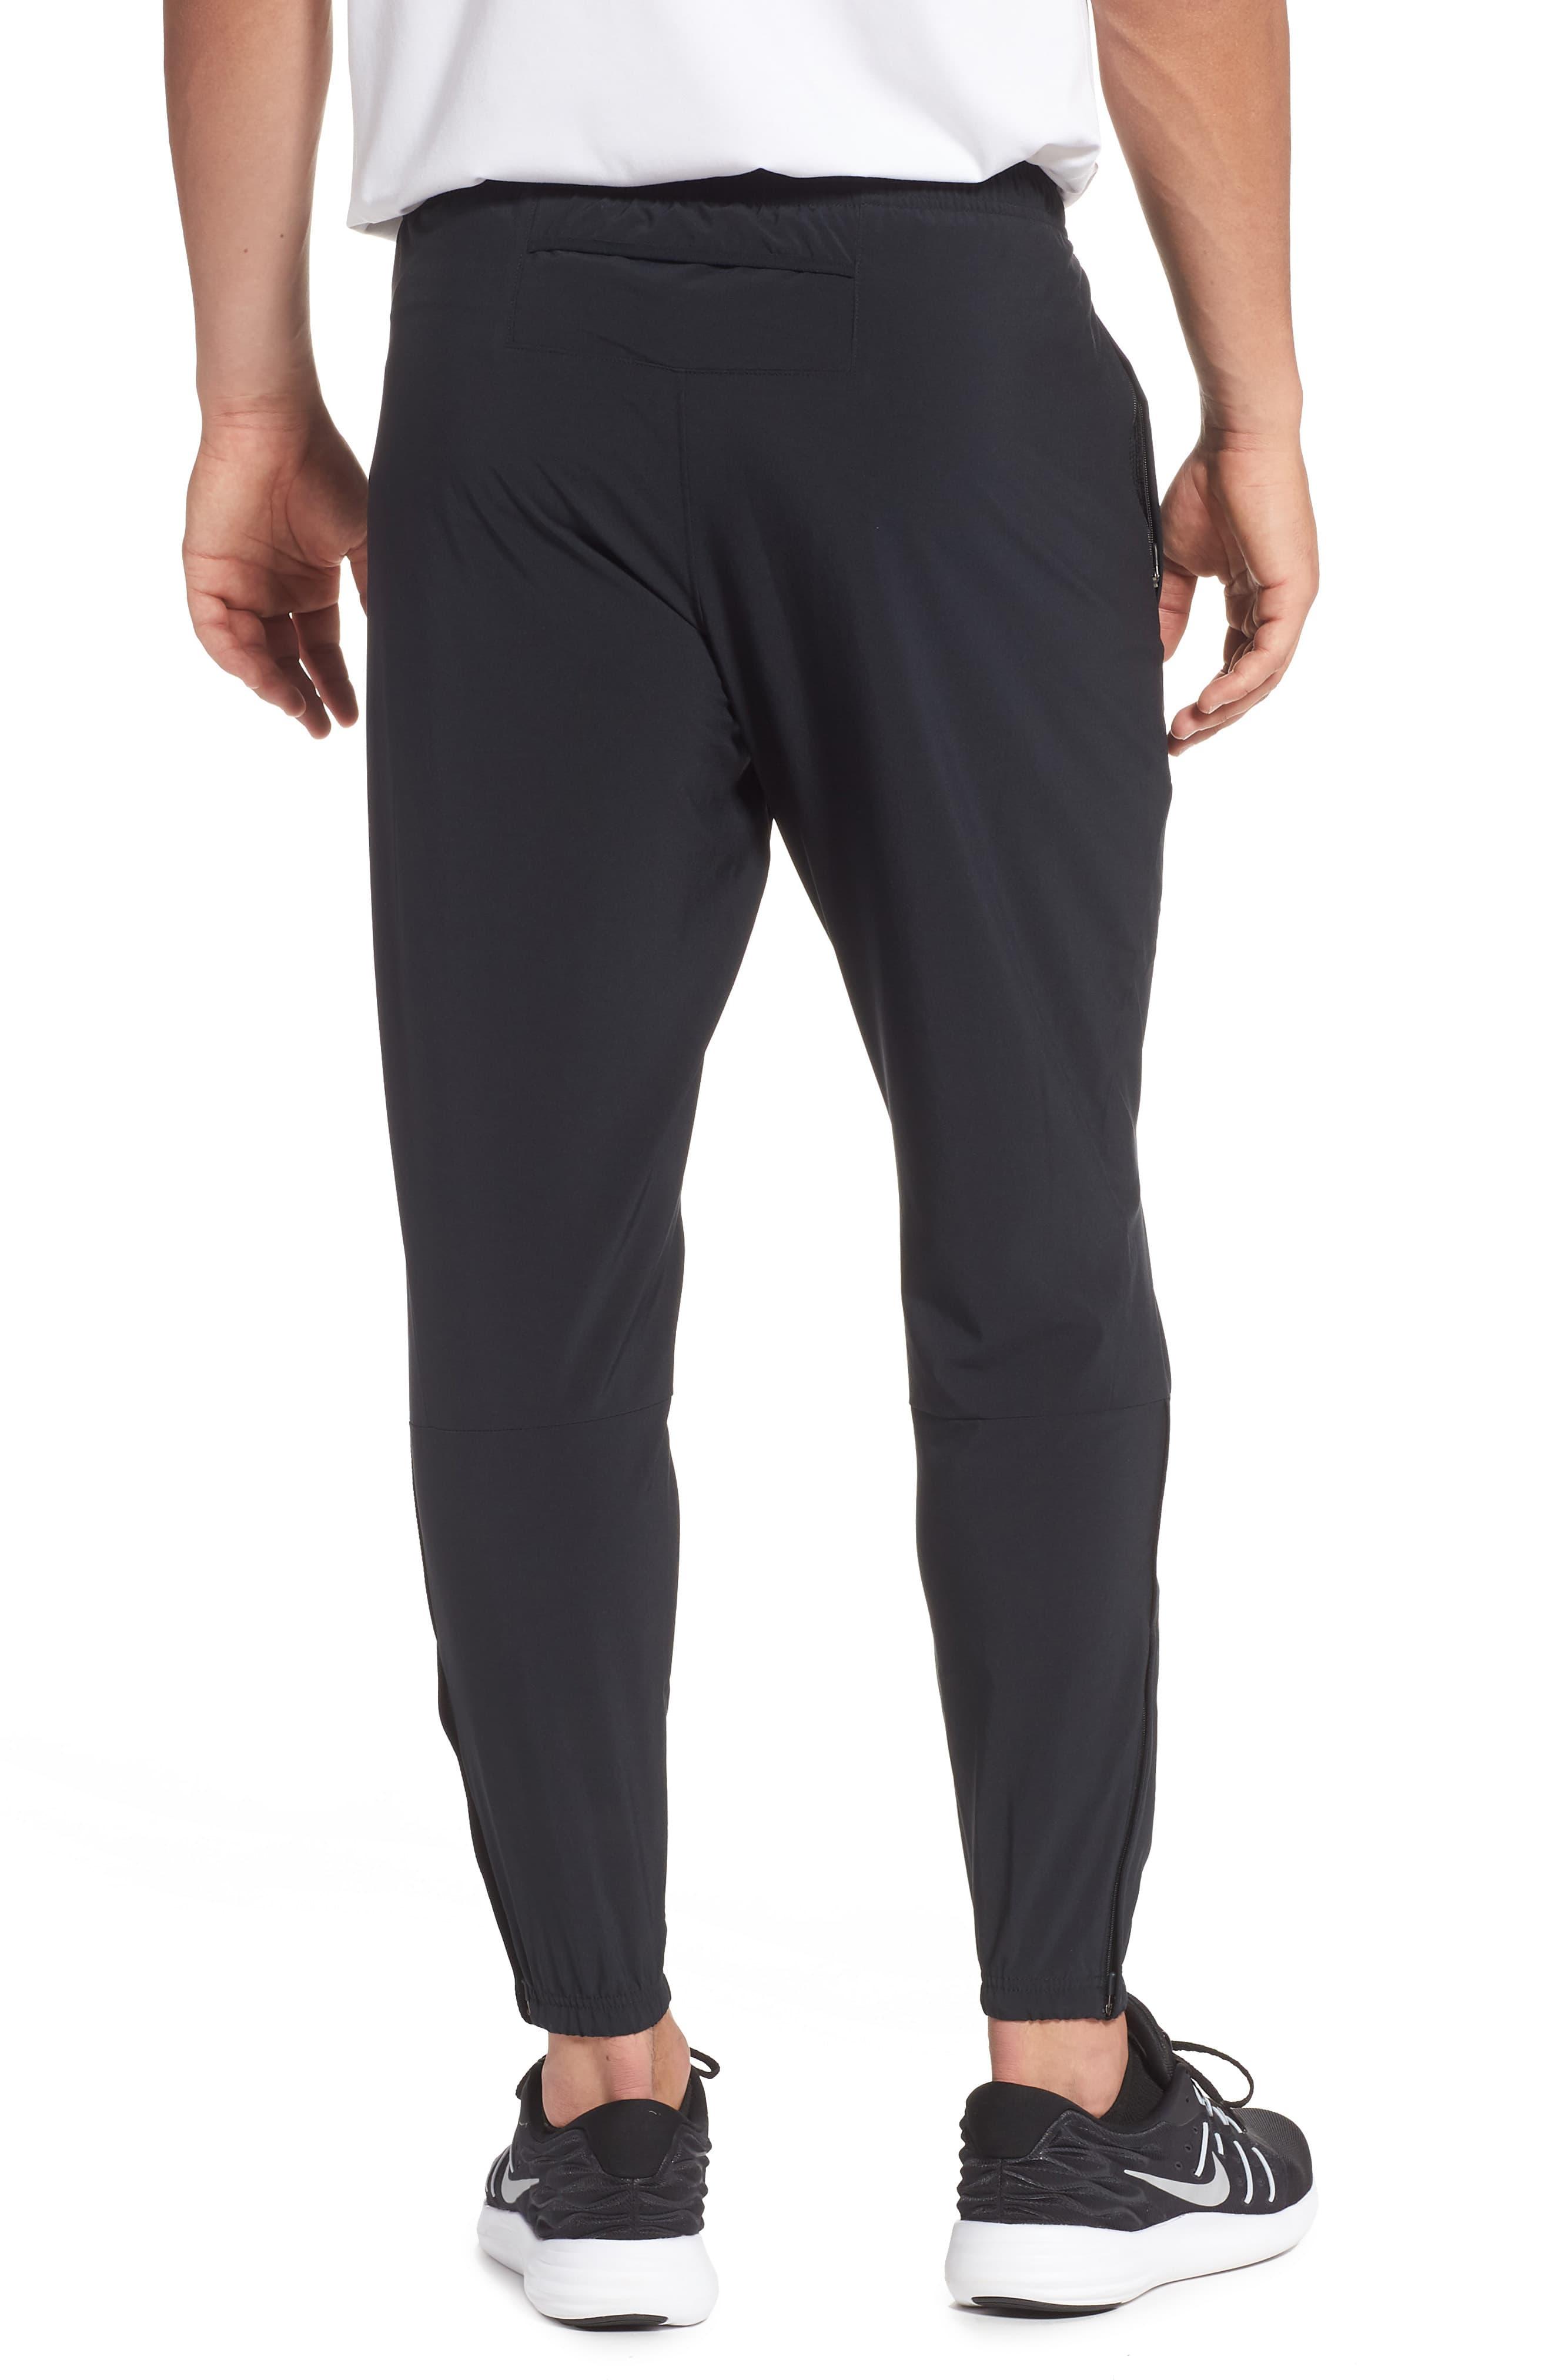 Nike Phantom Essence Athletic Pants in Black for Men - Lyst